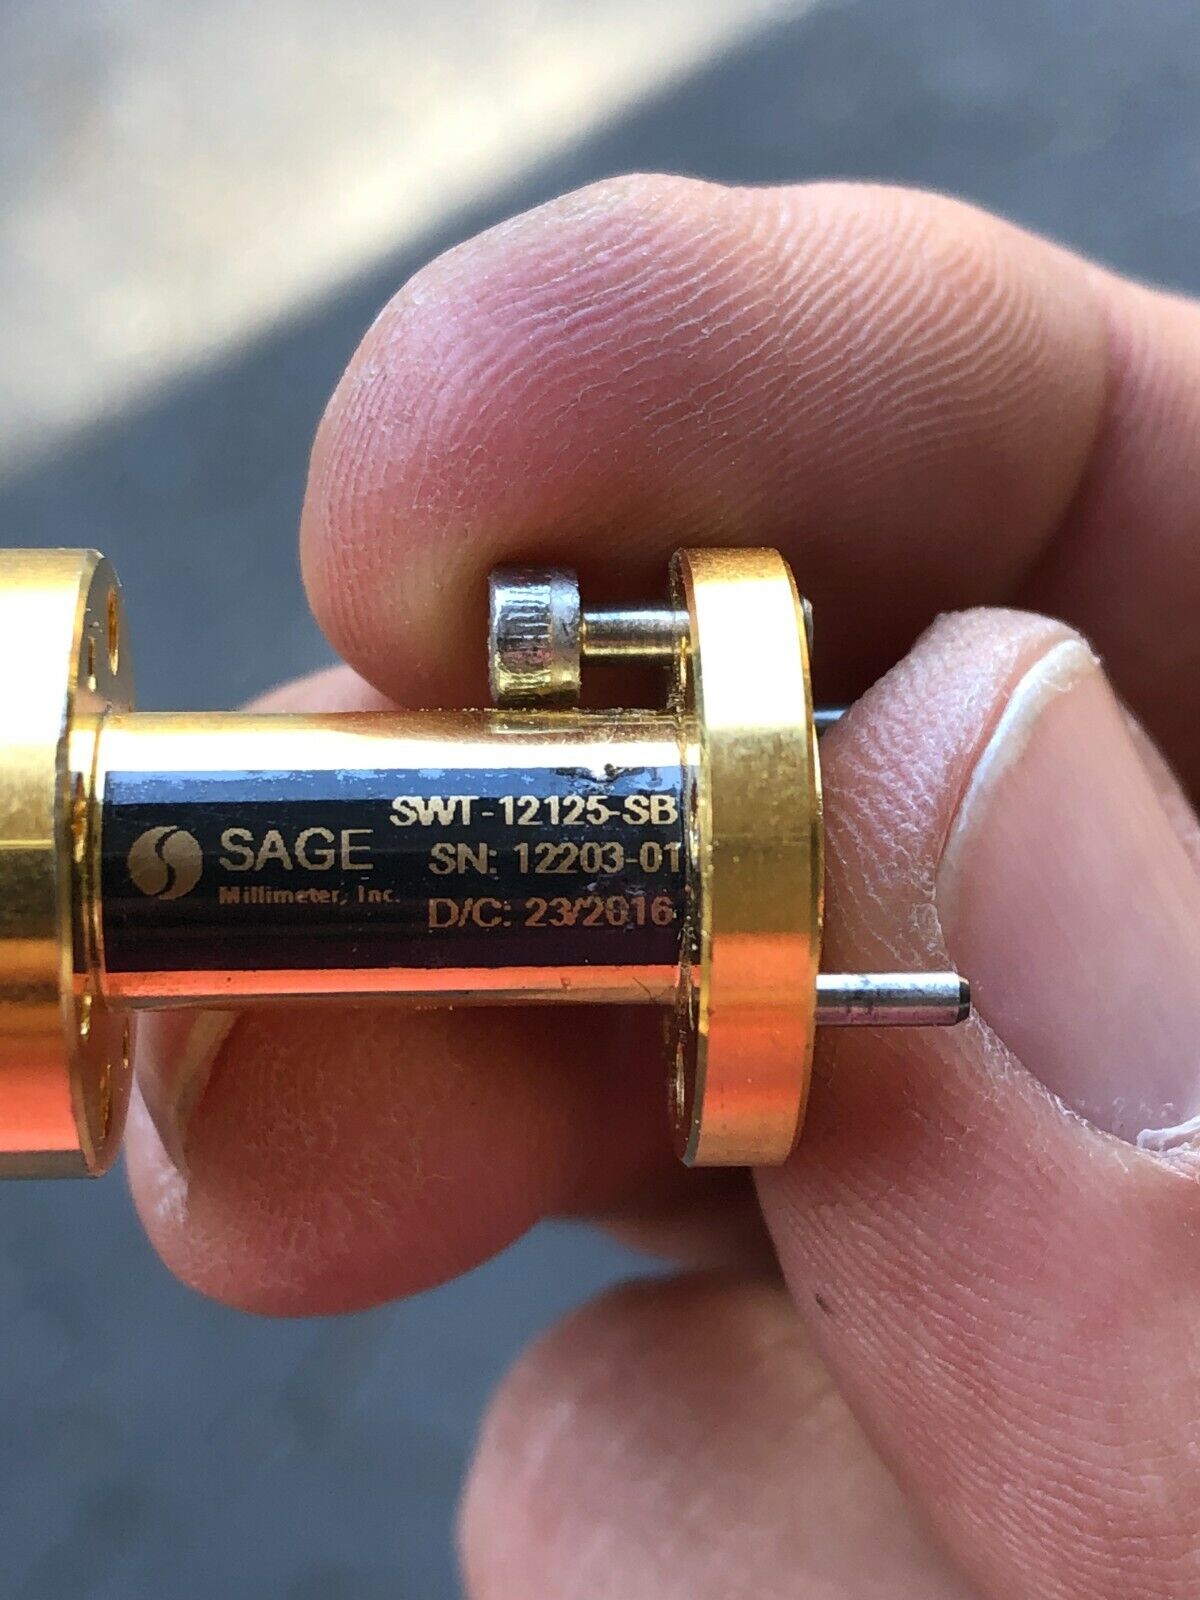 Sage Millimeter Swt-12125-sb